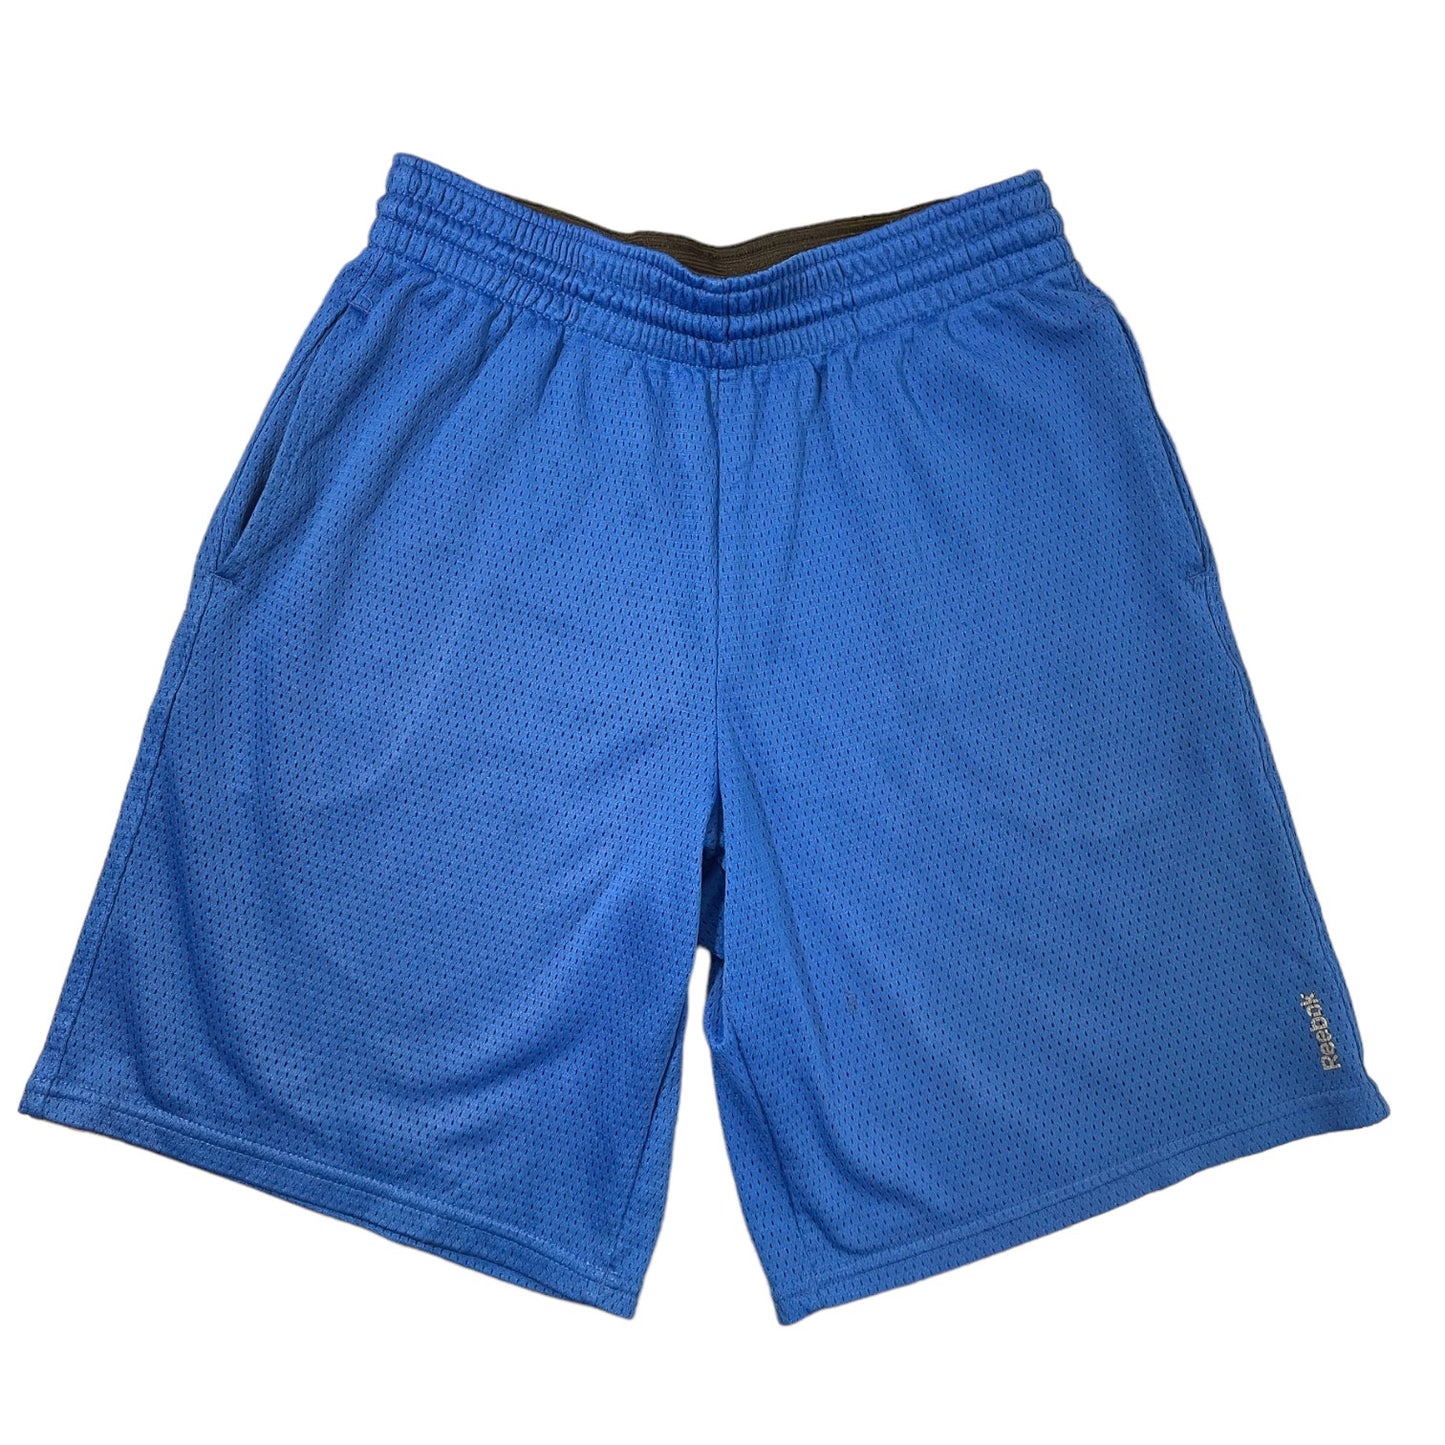 Boys Reebok Athletic Shorts Size 10-12